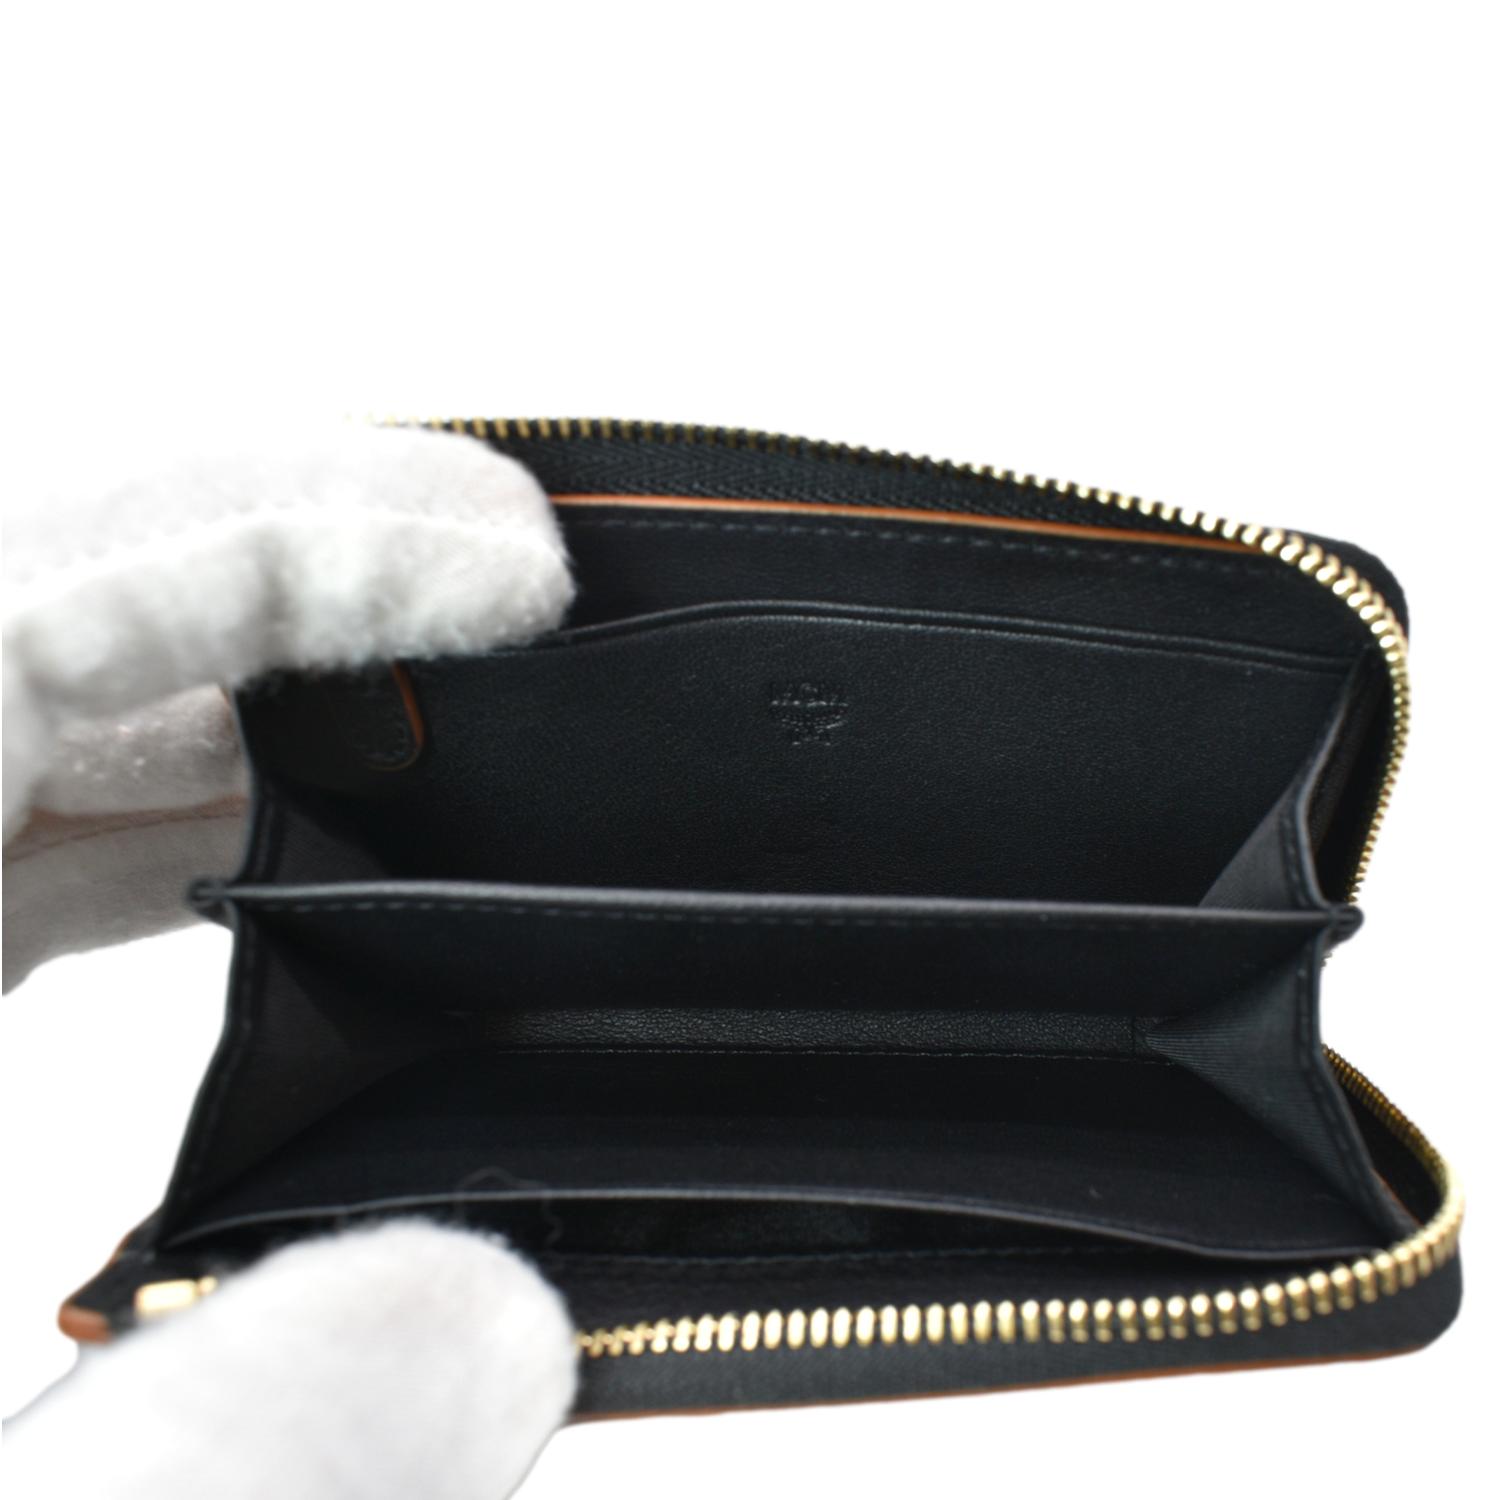 Mcm Mini Aren Shoulder Bag in Visetos, Luxury, Bags & Wallets on